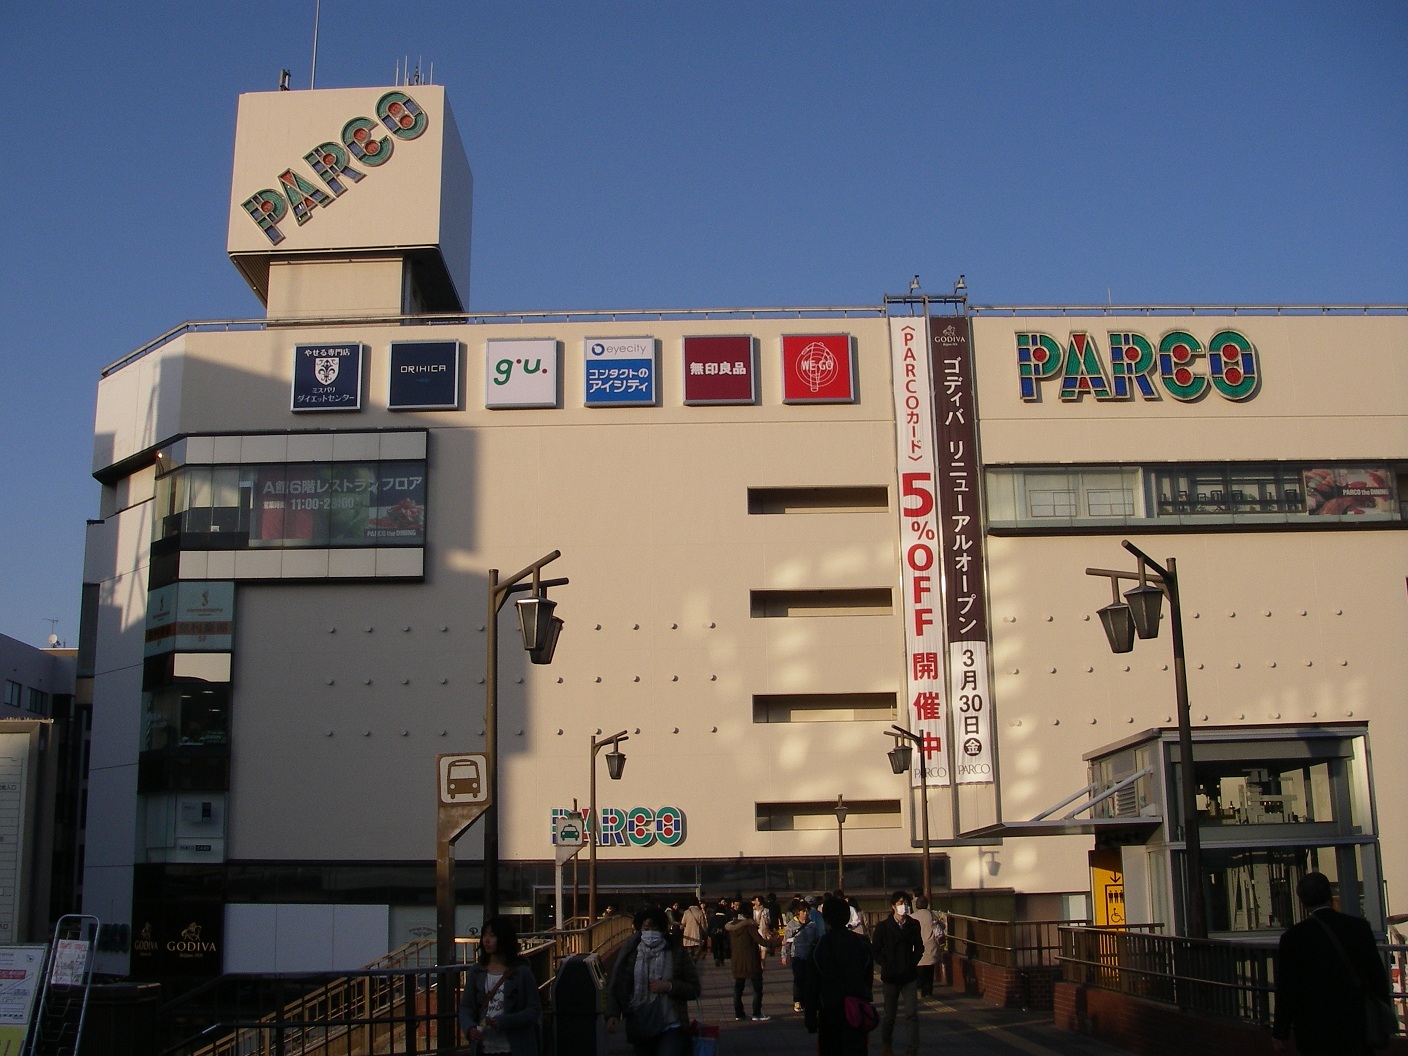 Shopping centre. 1846m to Parco Tsudanuma store (shopping center)